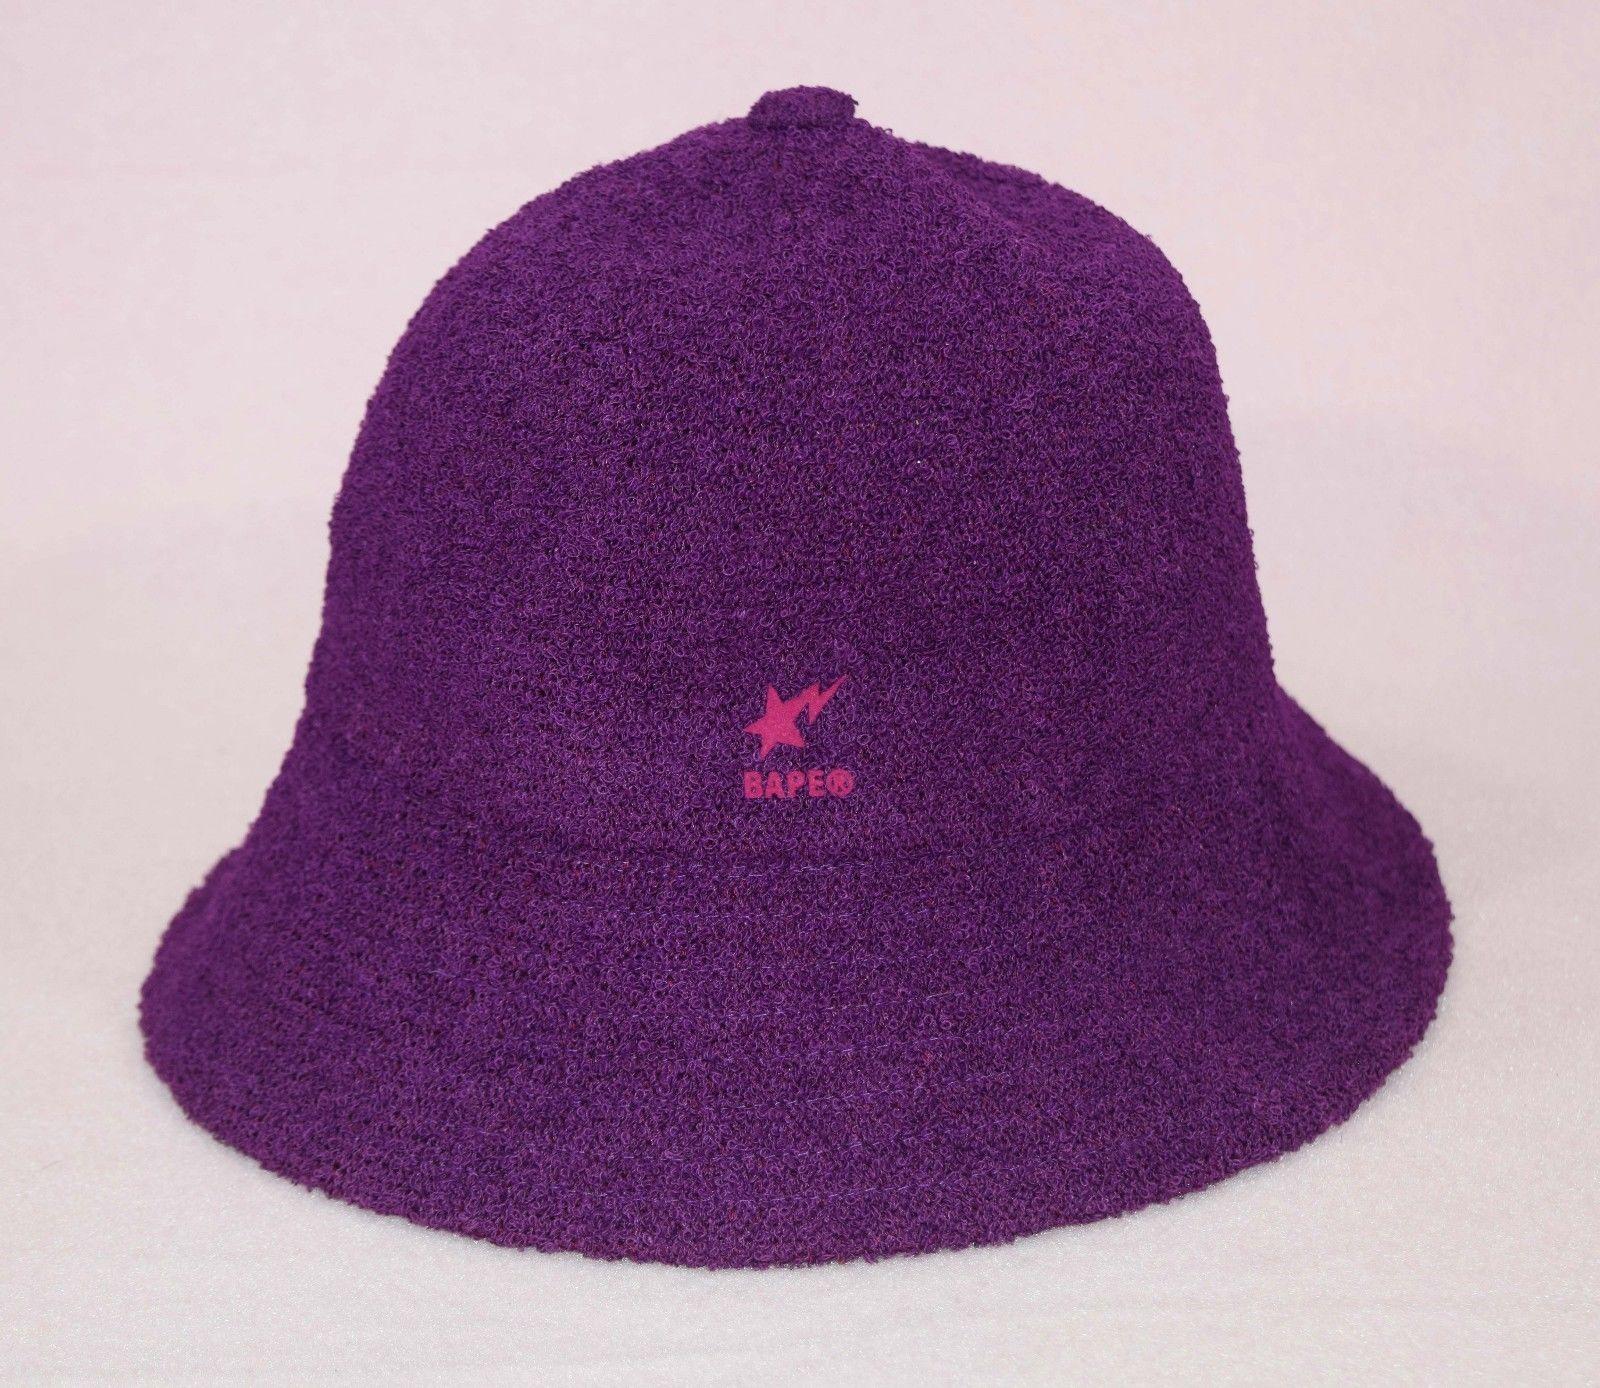 Bapesta Logo - OG Bape Bapesta Logo Purple Kangol Style Bucket Hat Size L nigo ...